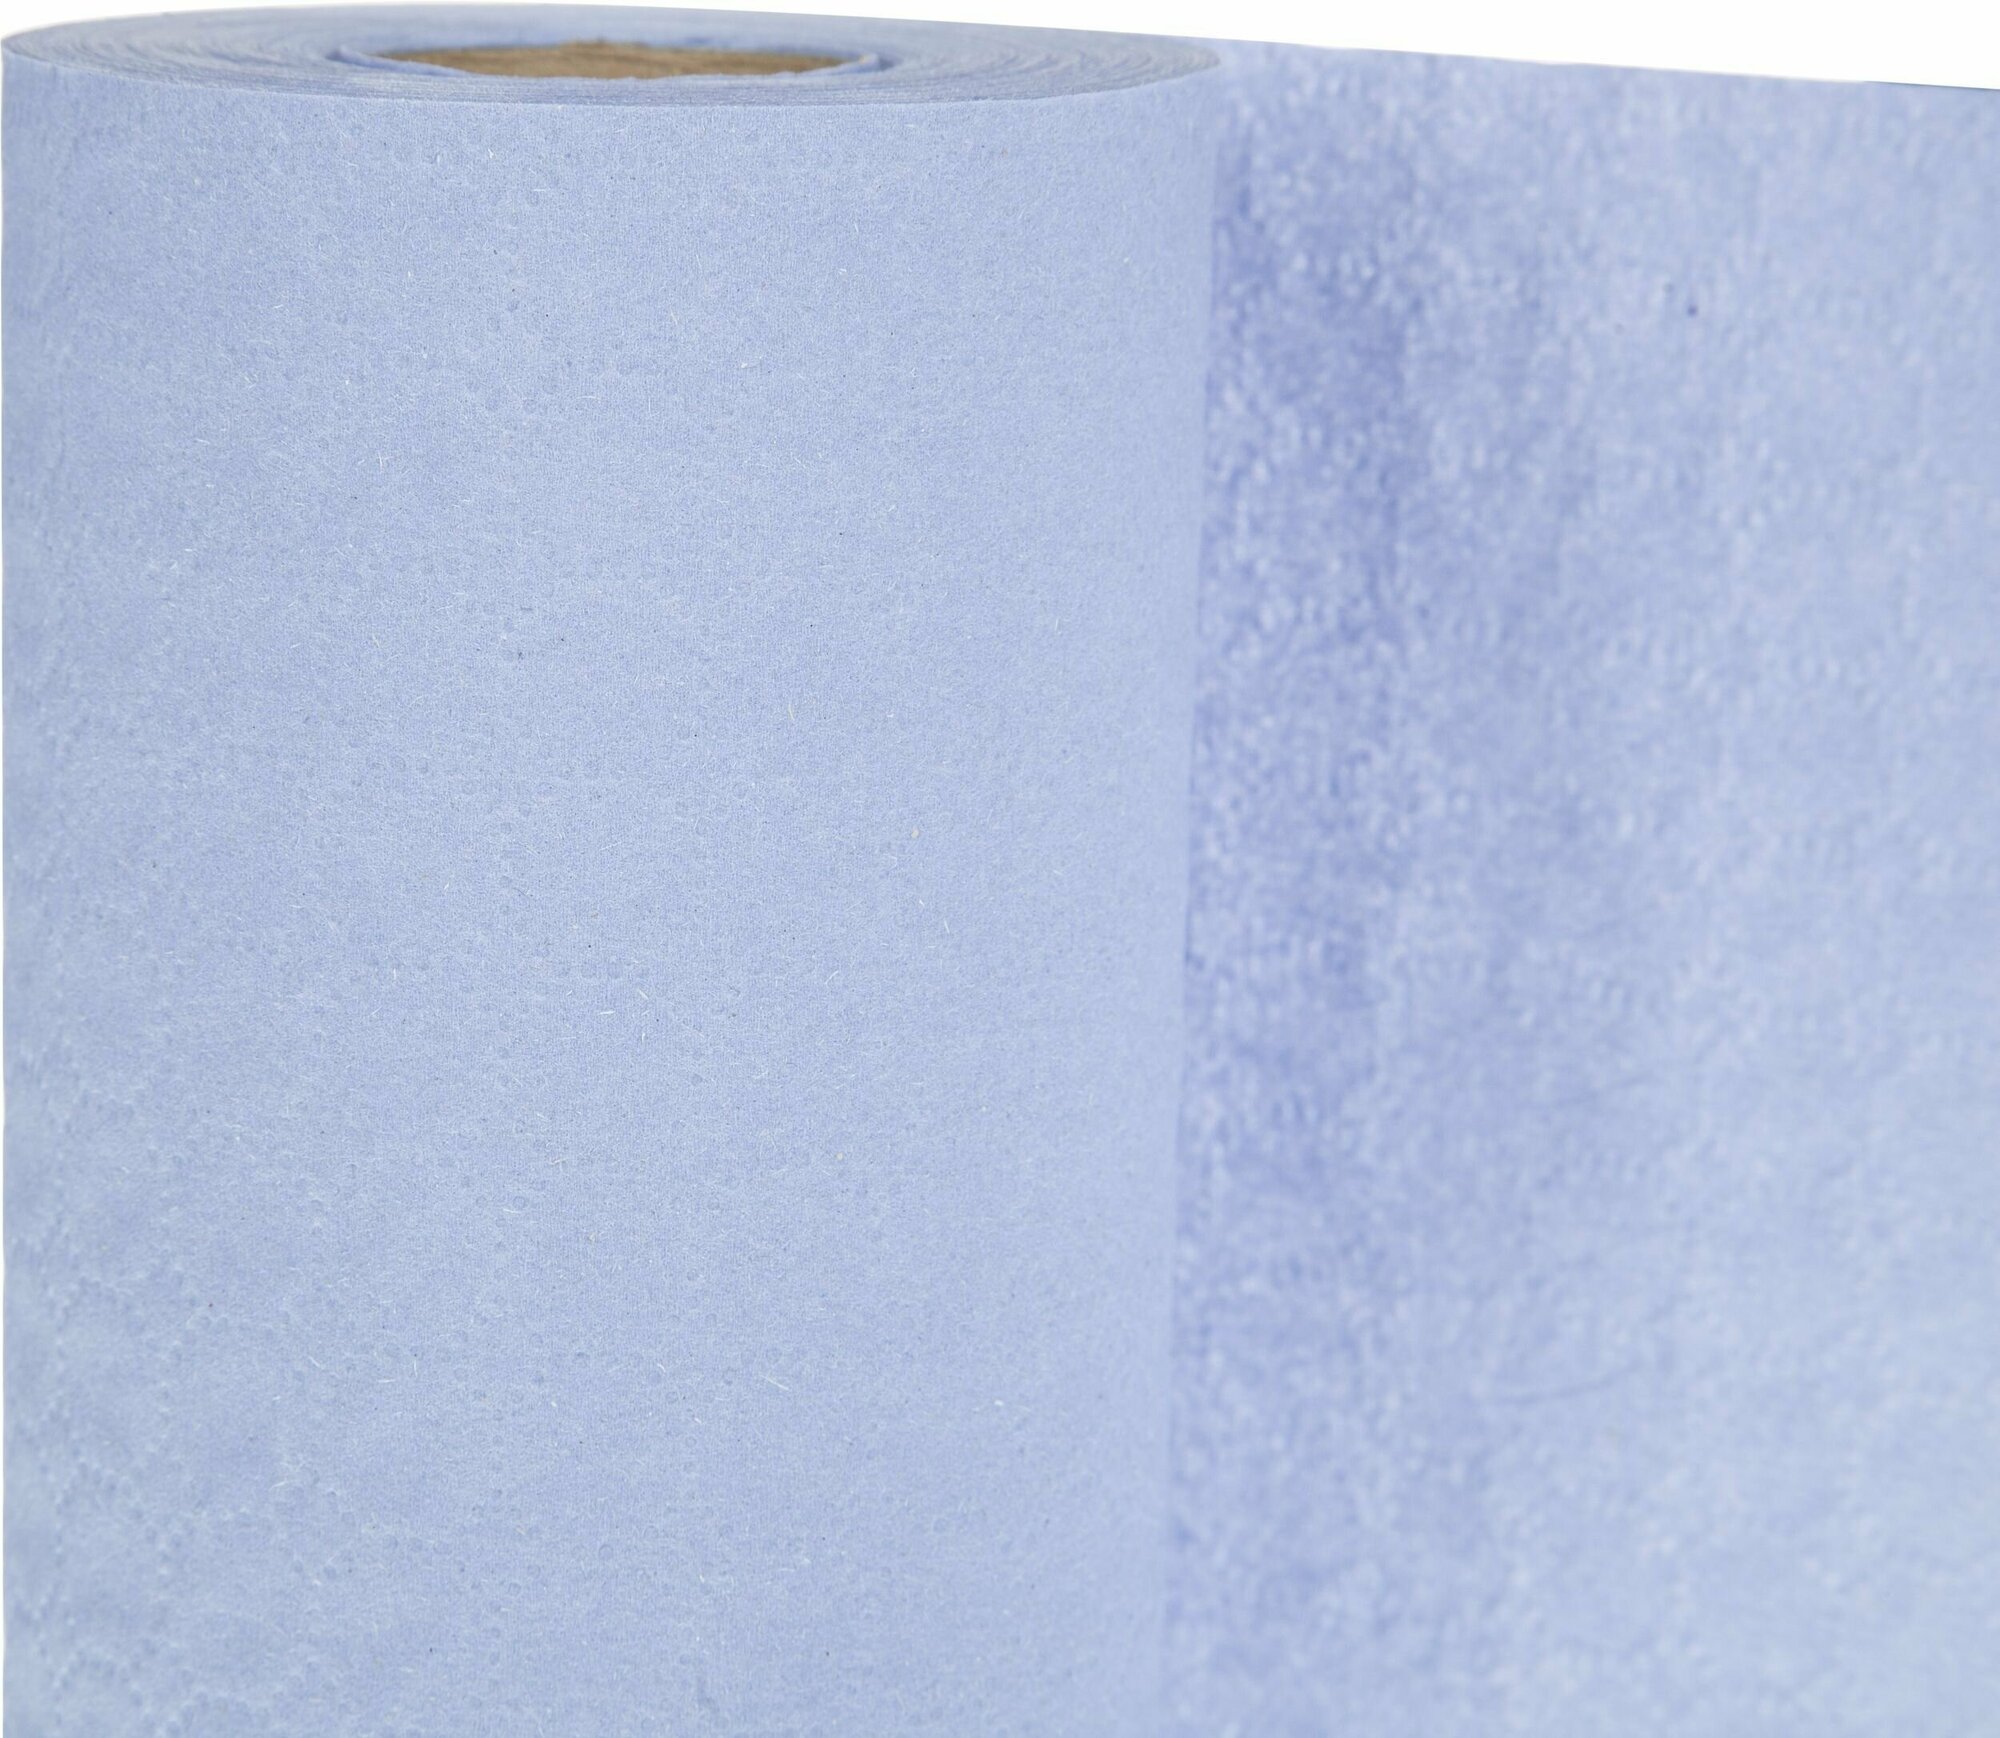 Протирочная бумага Luscan Professional, 52 м, голубой, 200 лист., 1 уп.